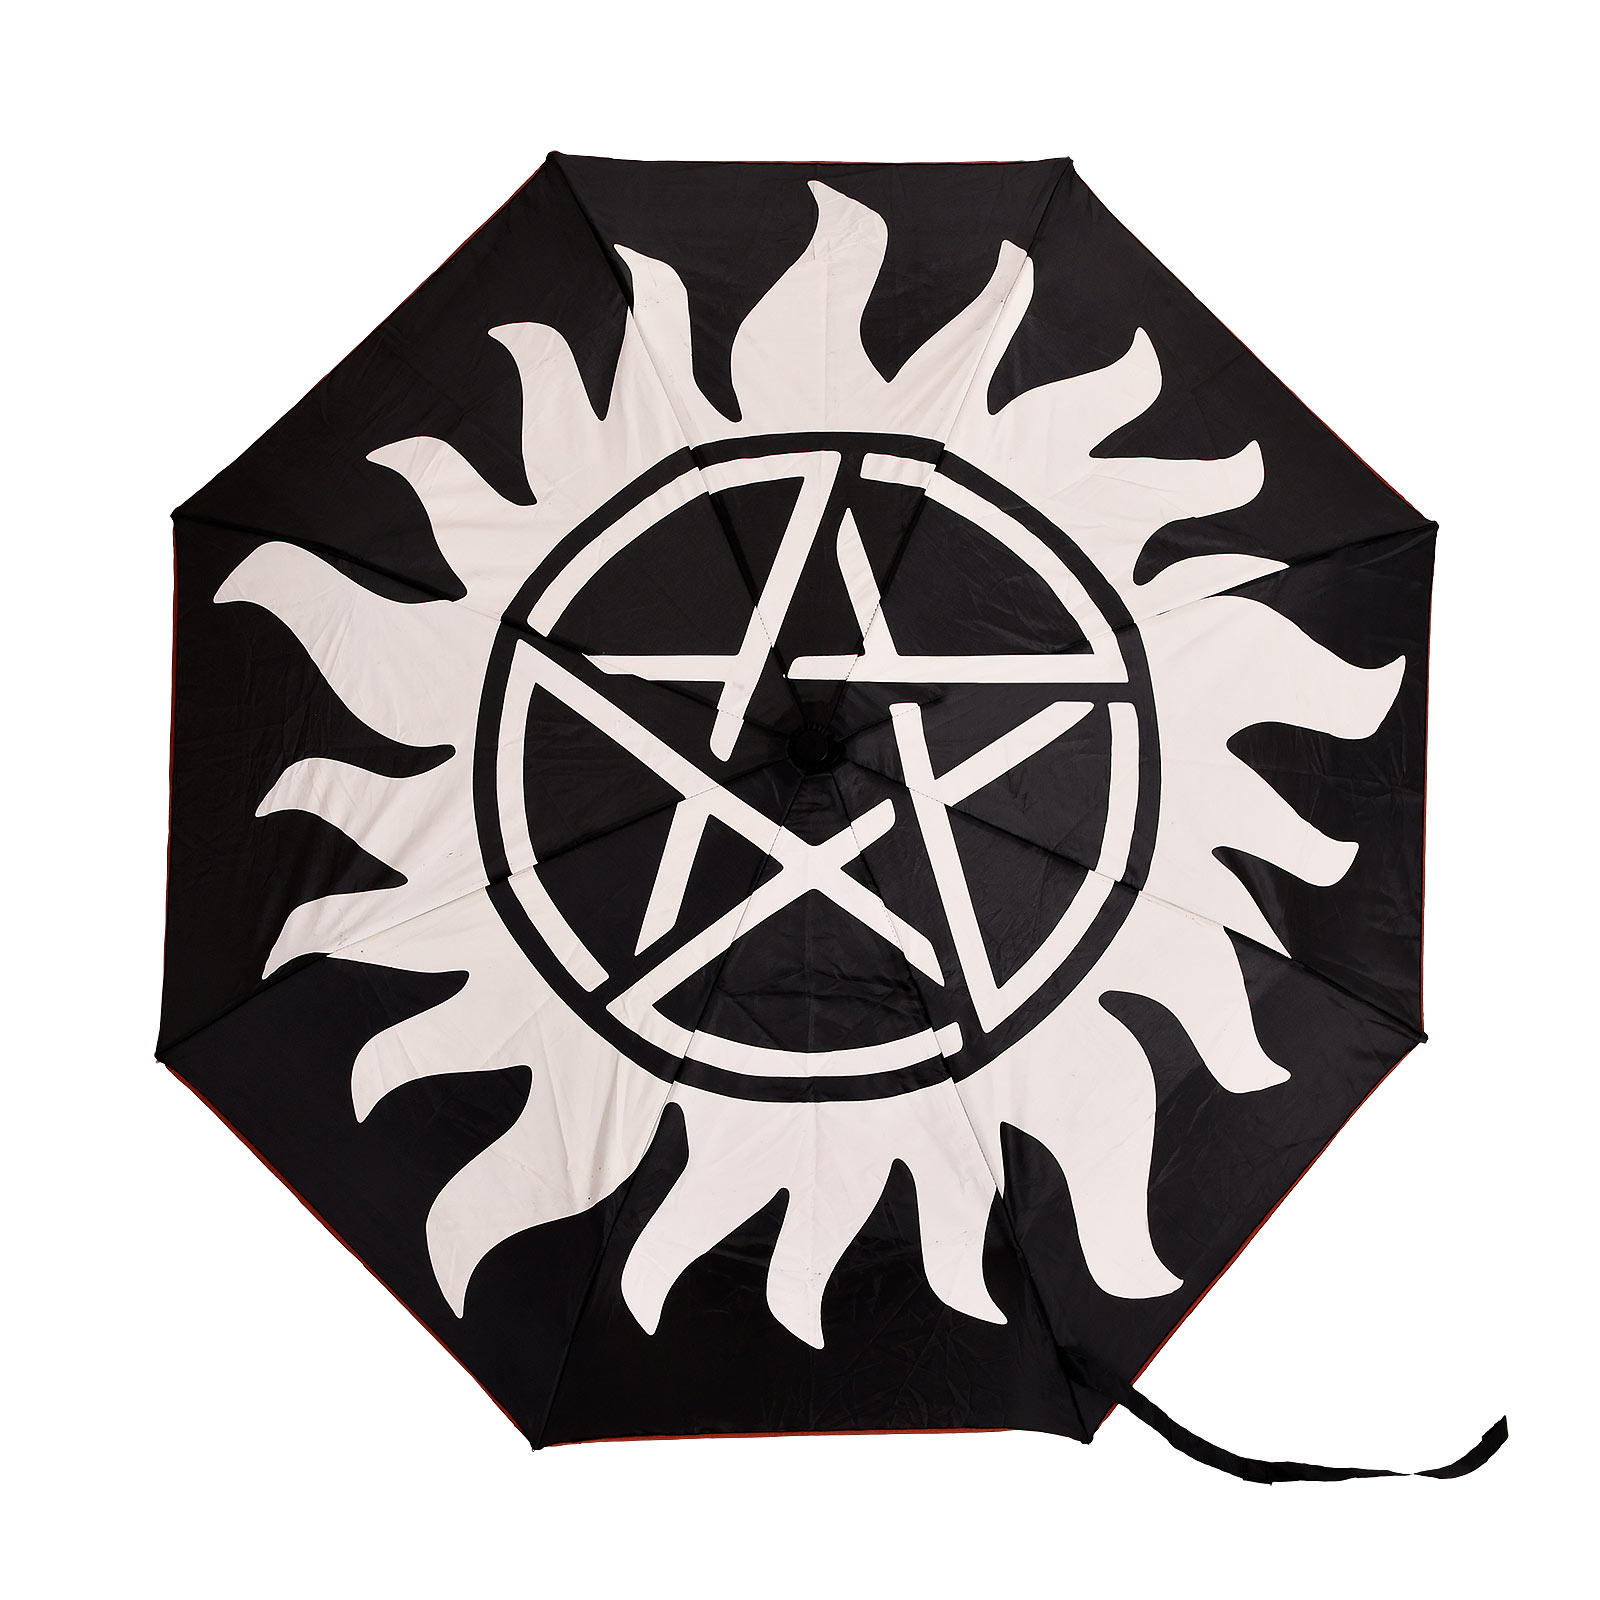 Supernatural - Anti Possession Symbol Schirm mit Aqua Effekt